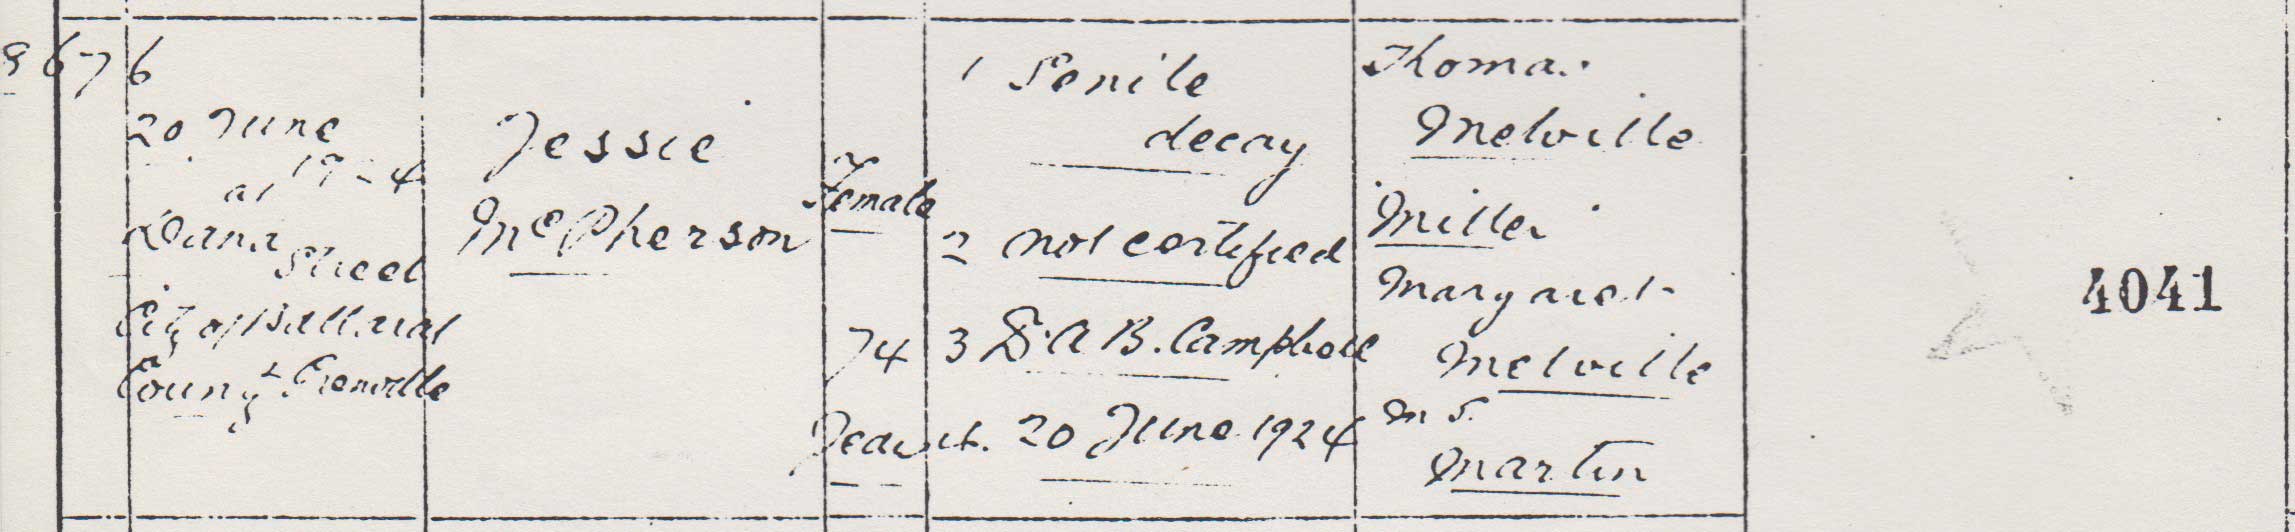 Jessie McPherson death certificate 1924 part 1